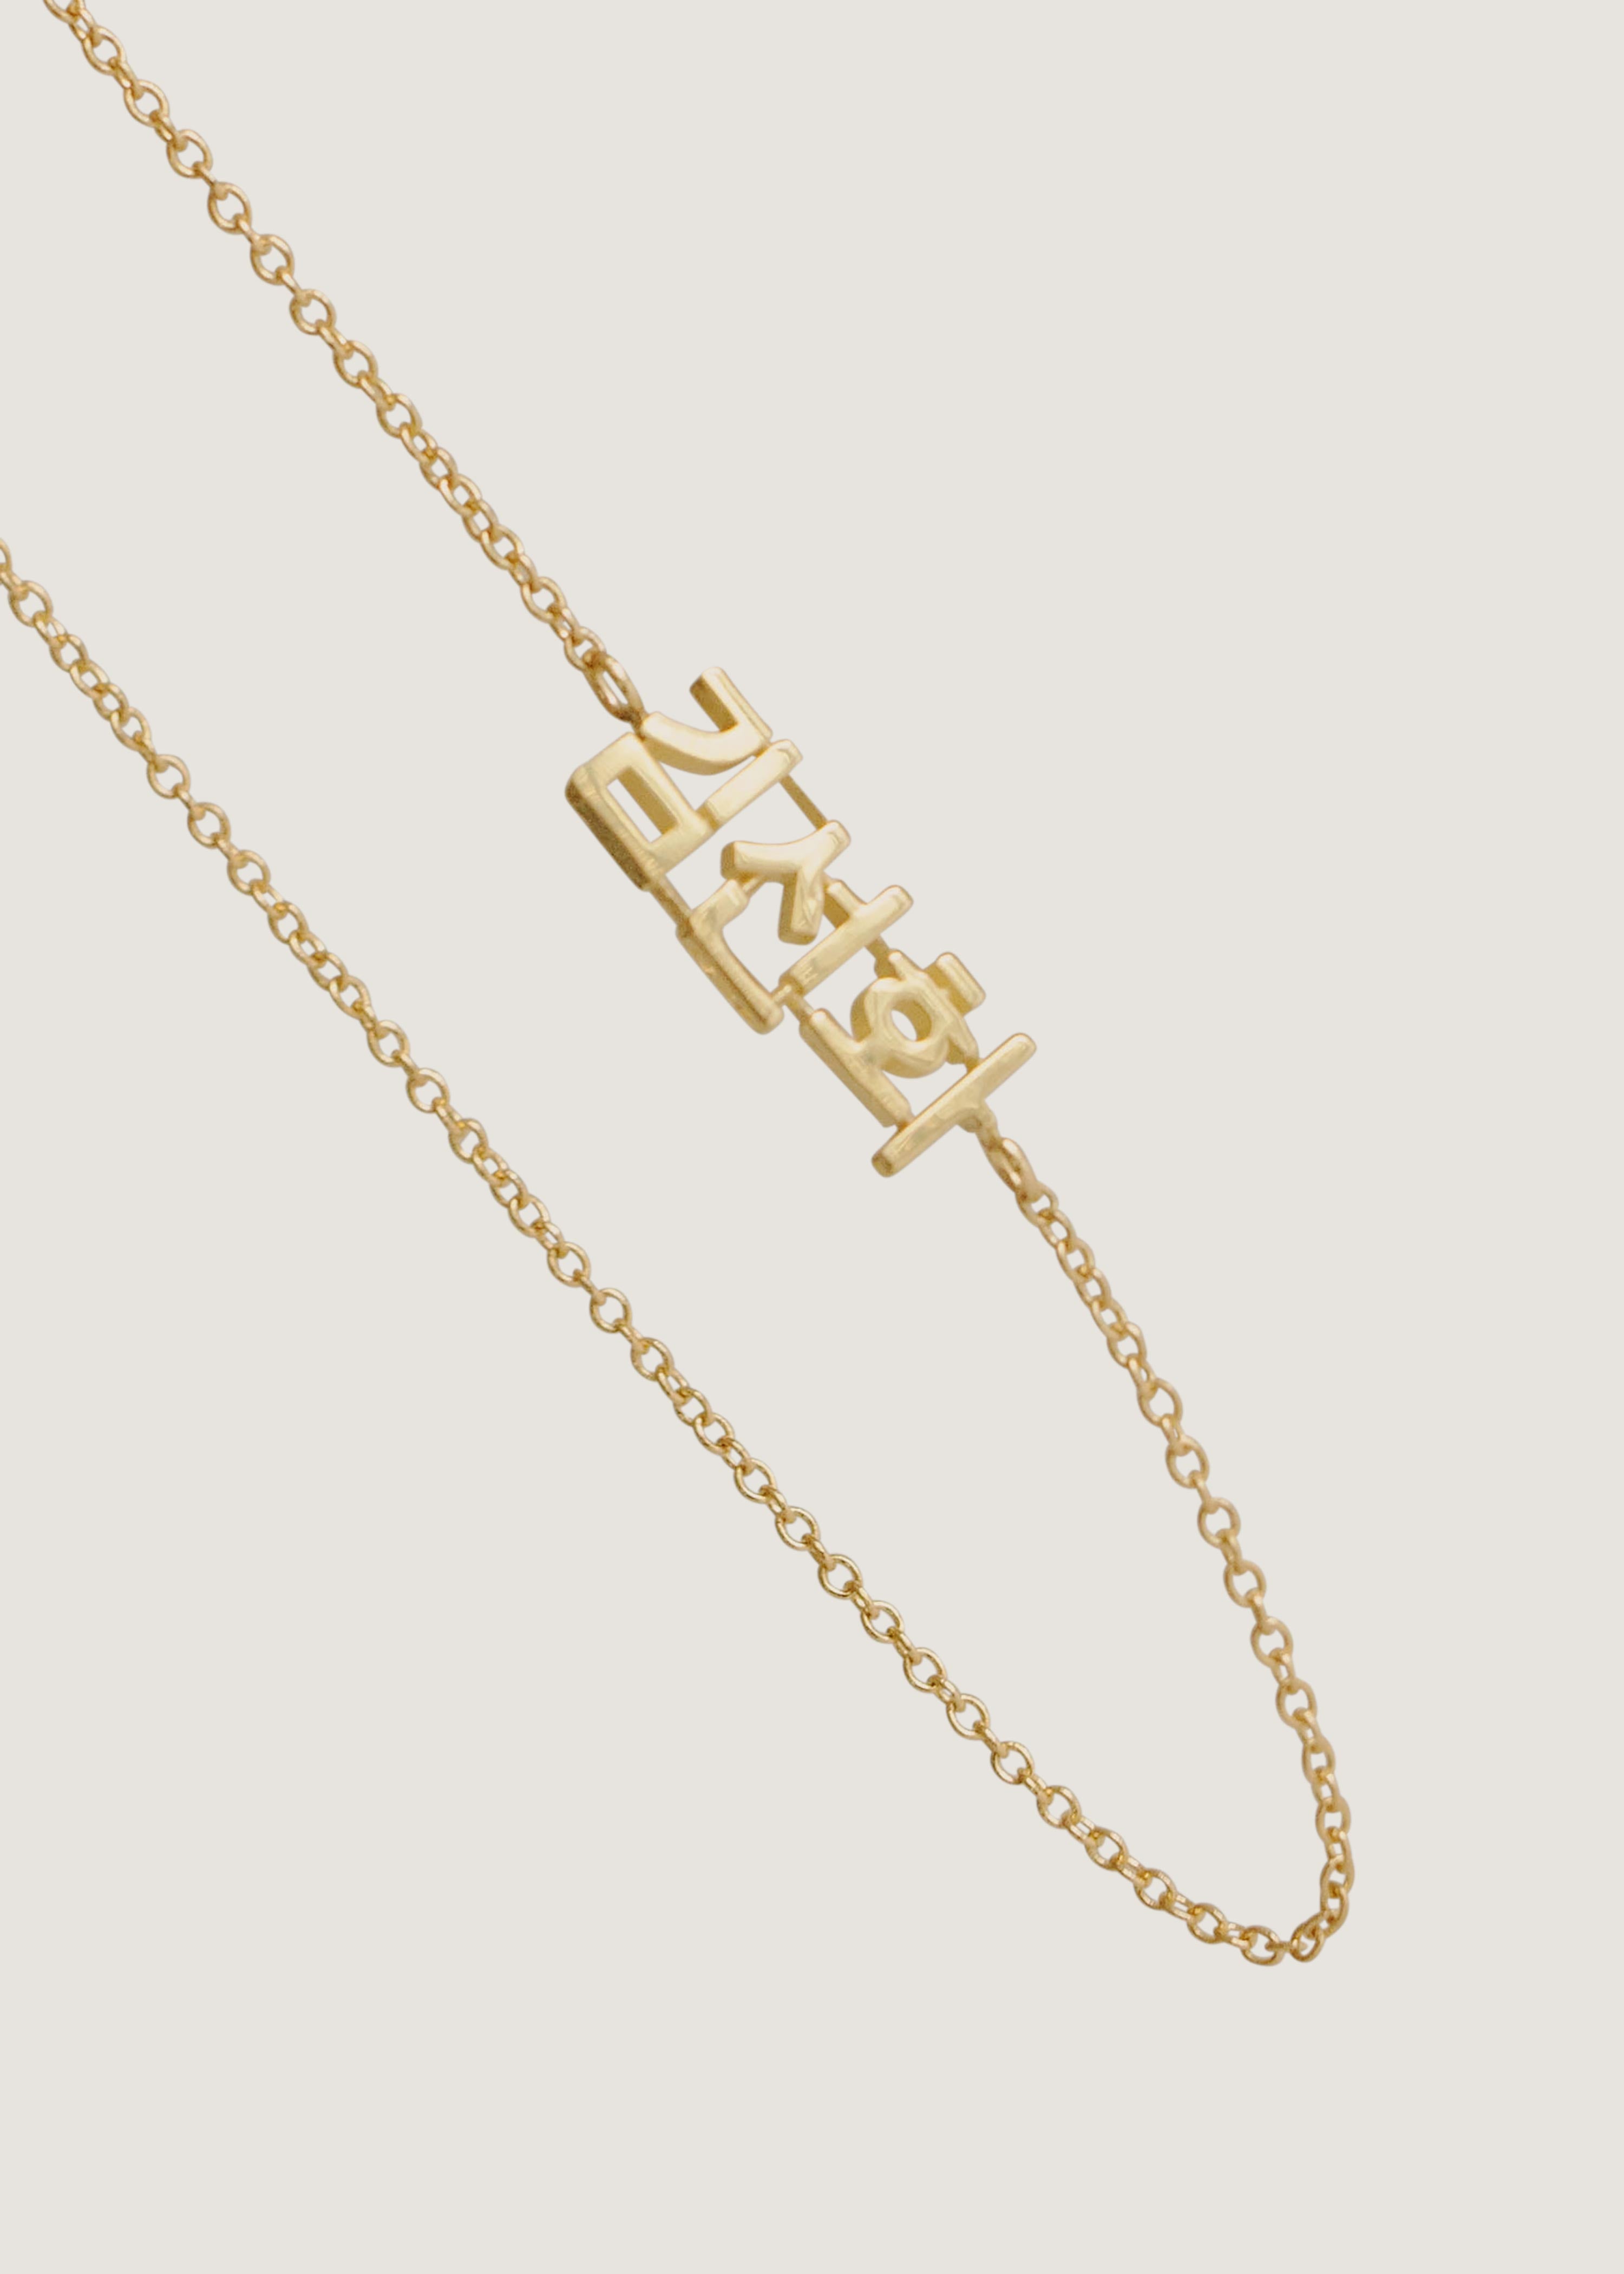 Kaia Initial Compass Bracelet in 18K Gold Vermeil